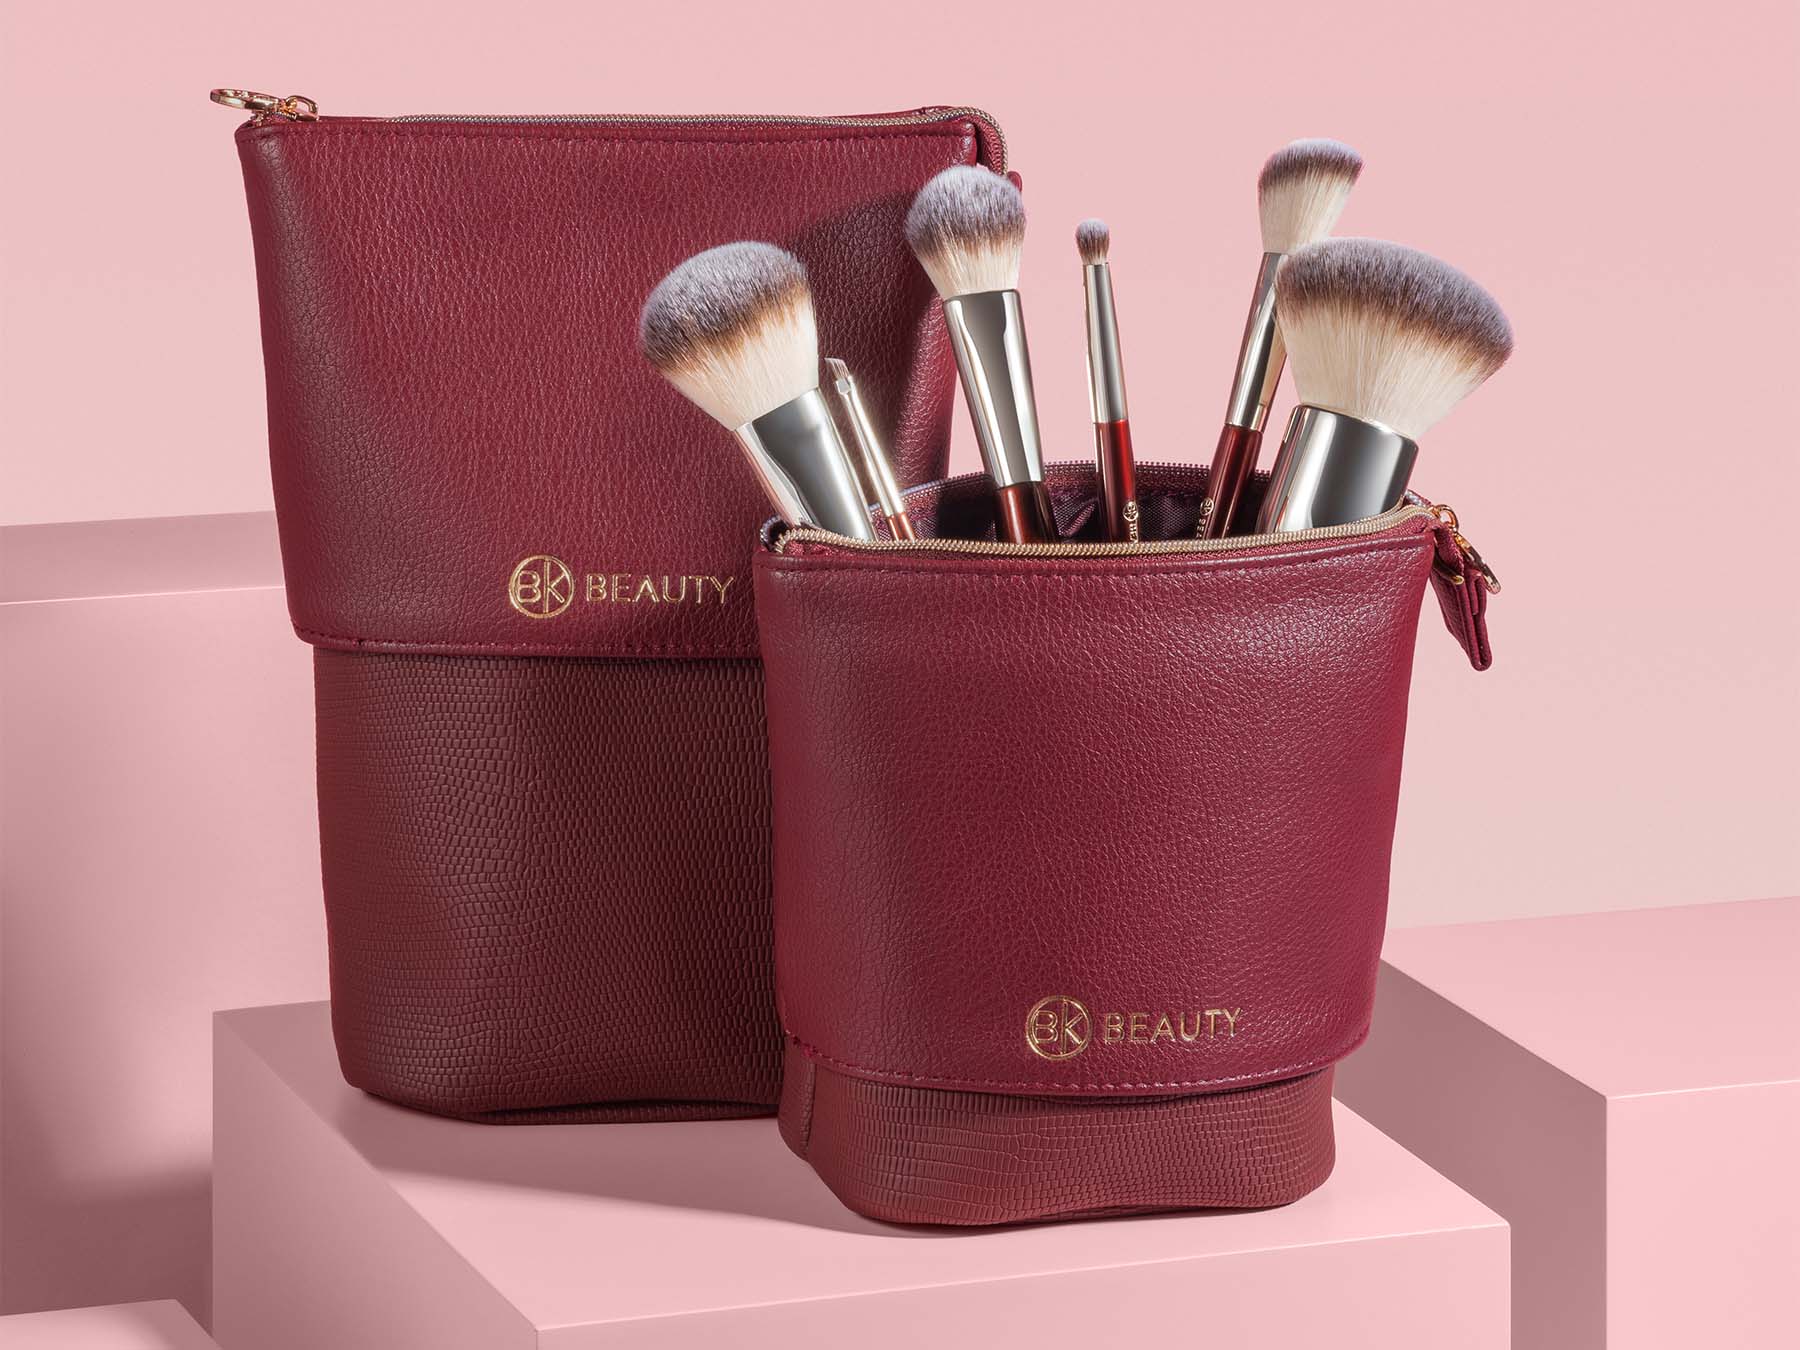 Standup Brush Holder & Travel Makeup Bag